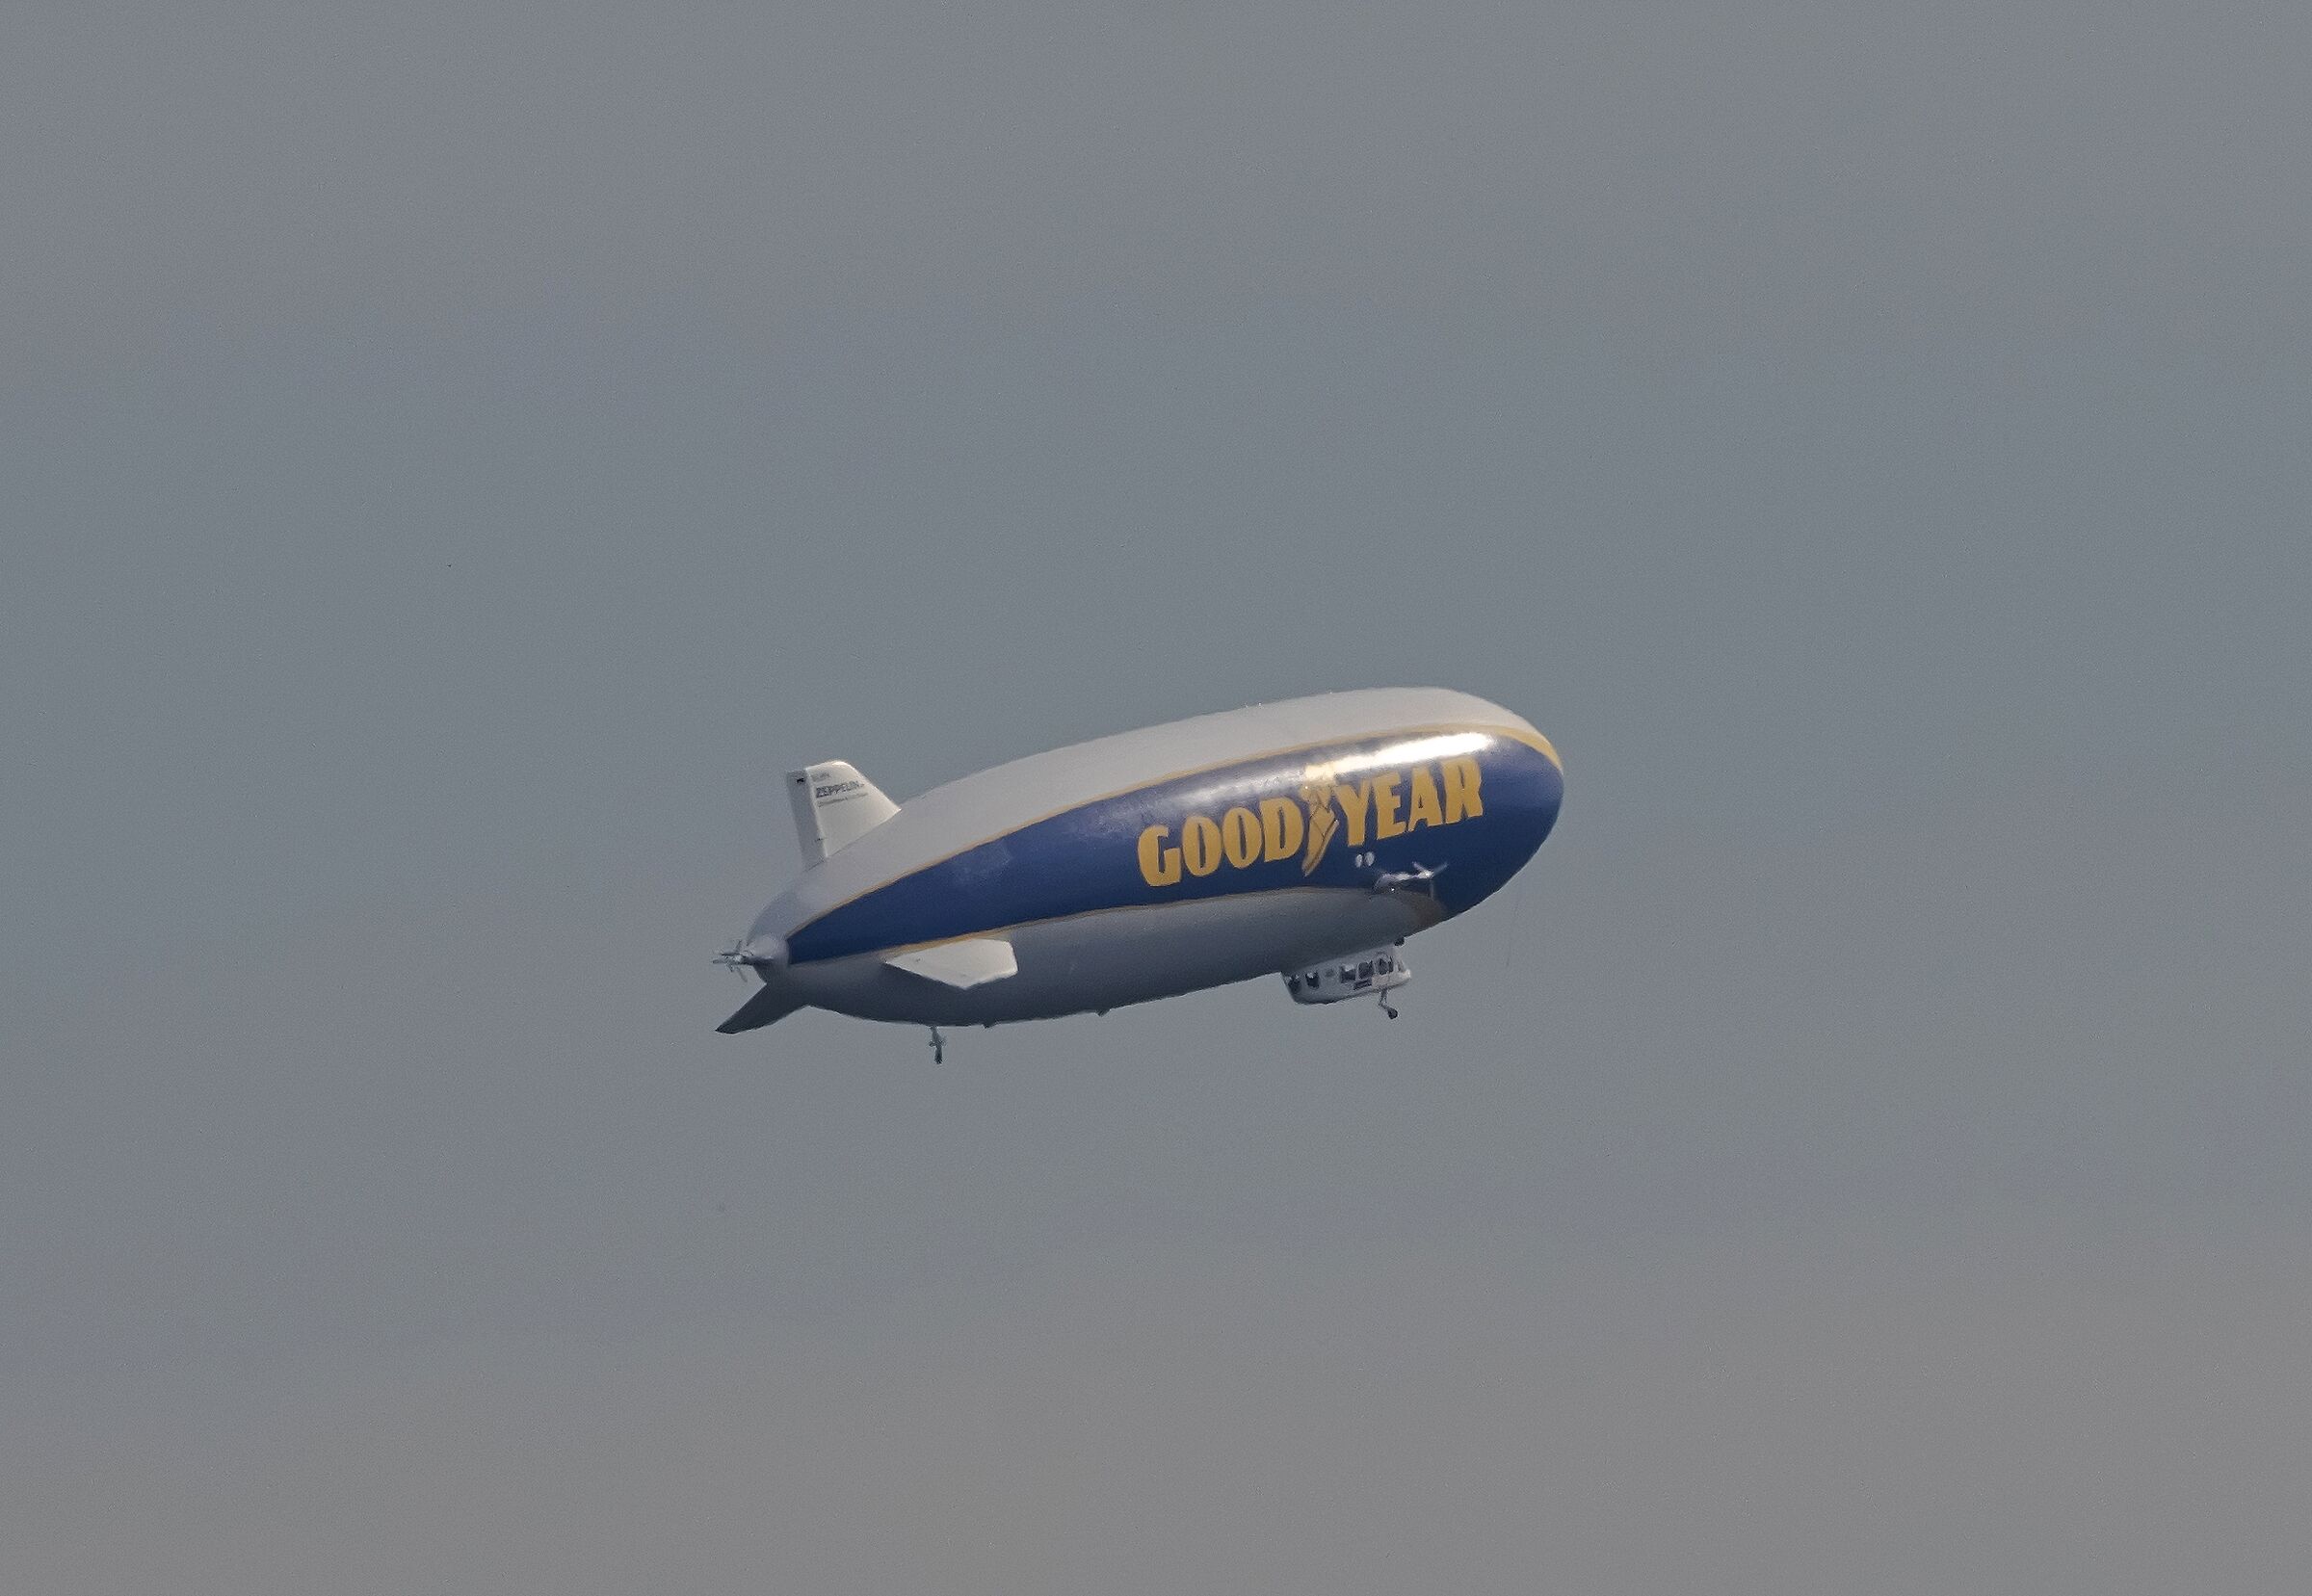  Good Year airship in flight 17/07/2021...